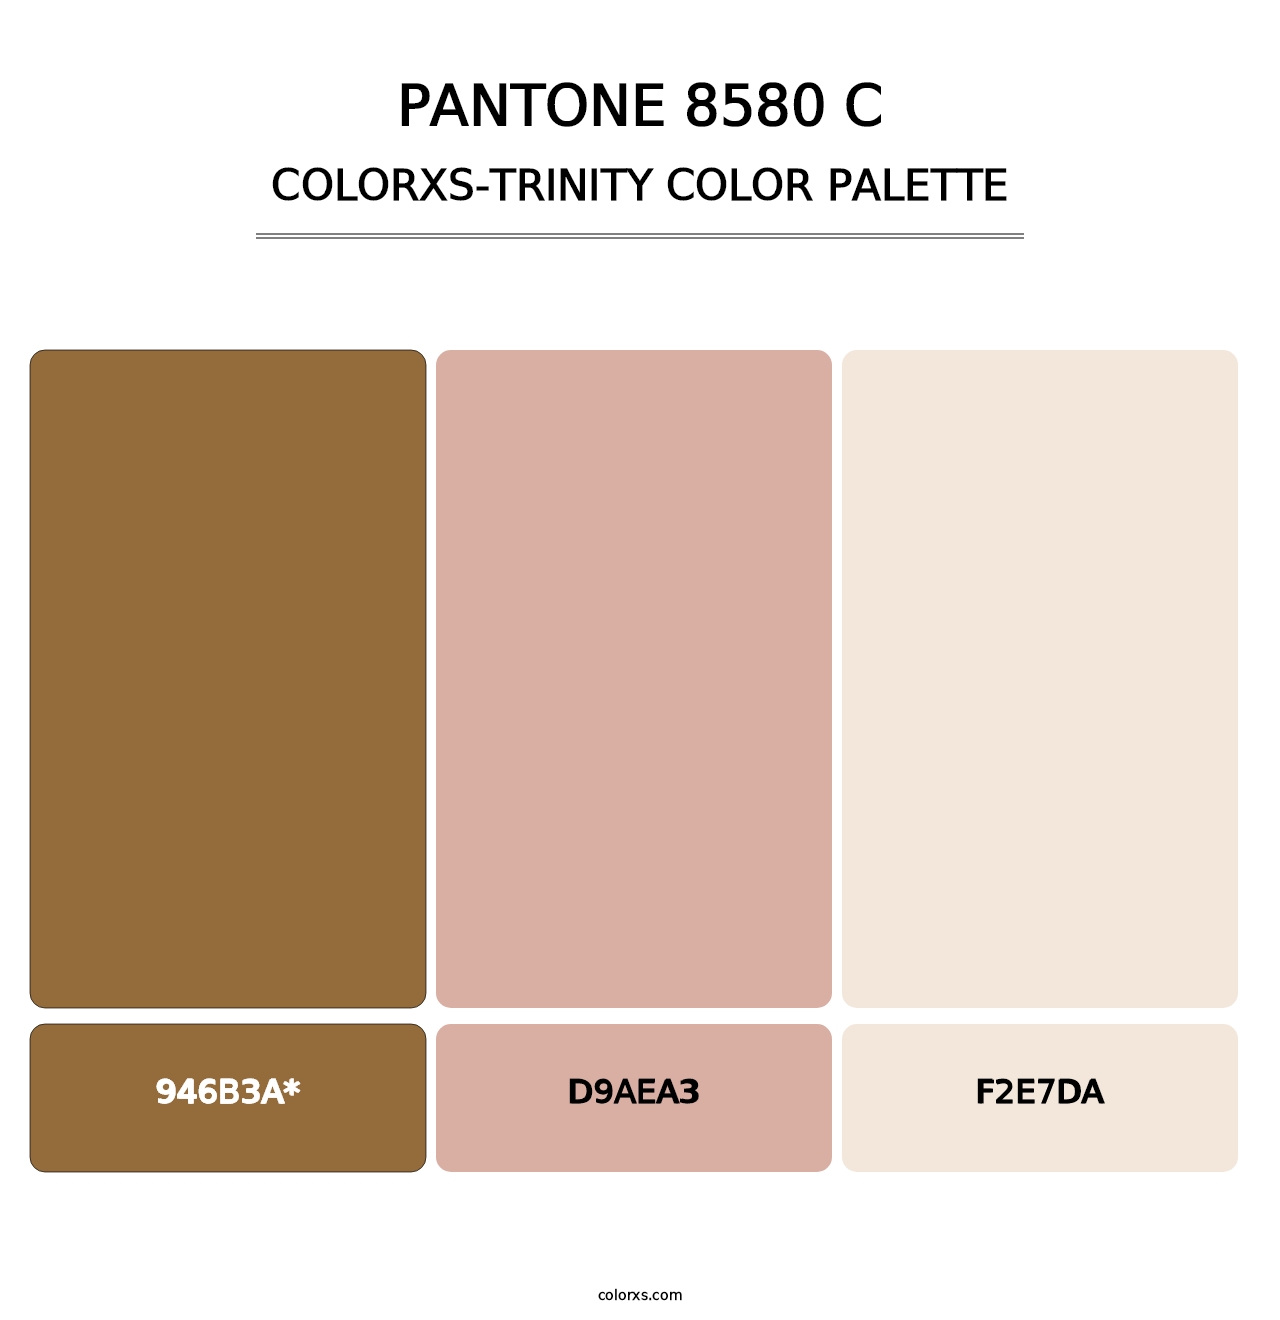 PANTONE 8580 C - Colorxs Trinity Palette